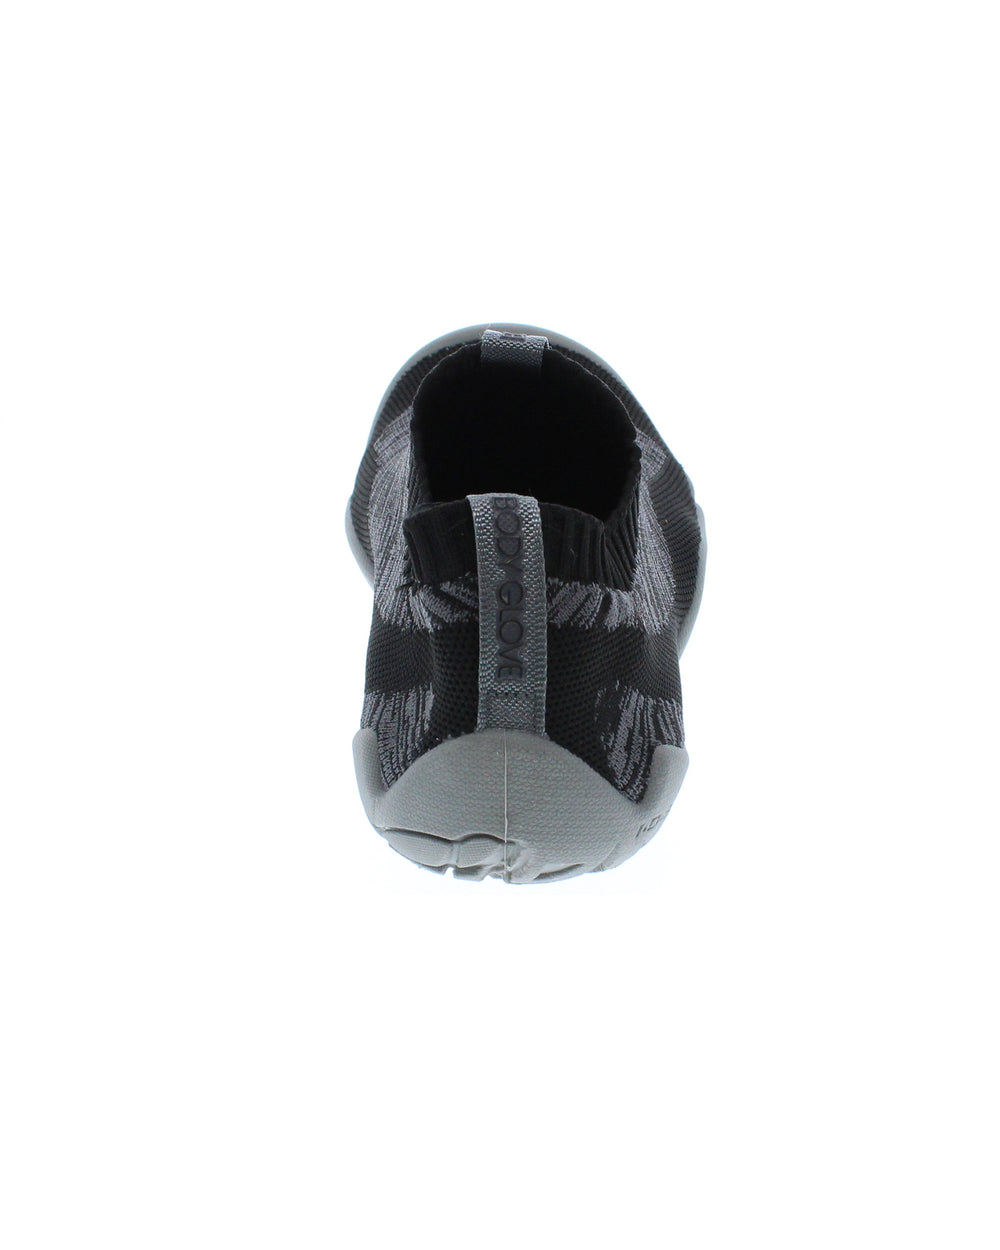 Men's Siphon Water Shoes - Black/Charcoal